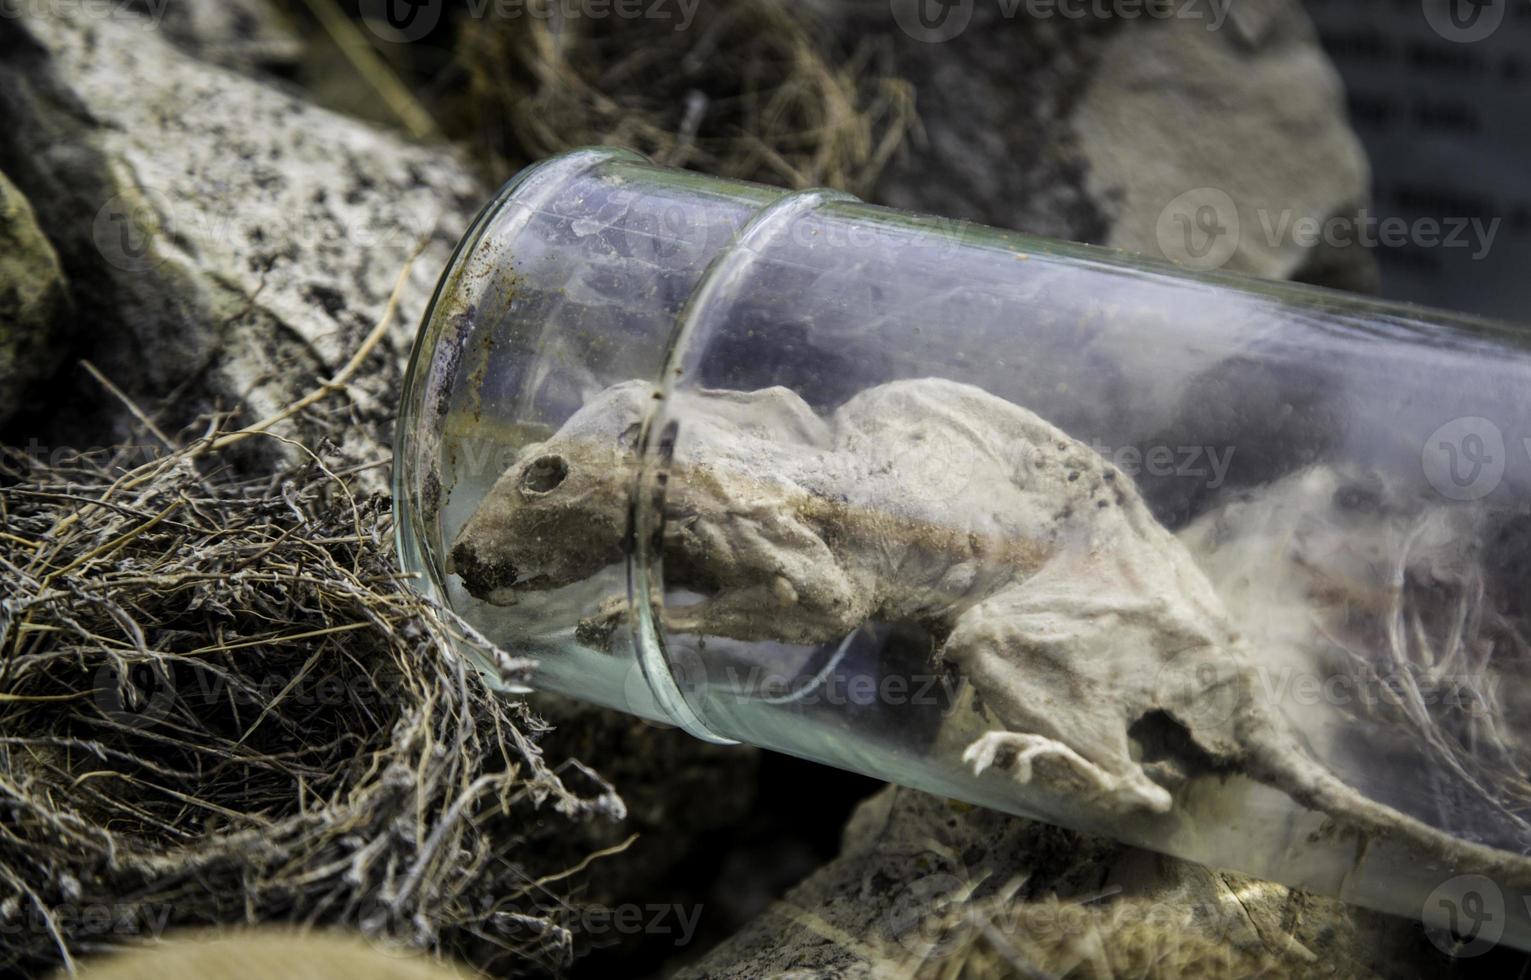 Dead rat in a jar photo